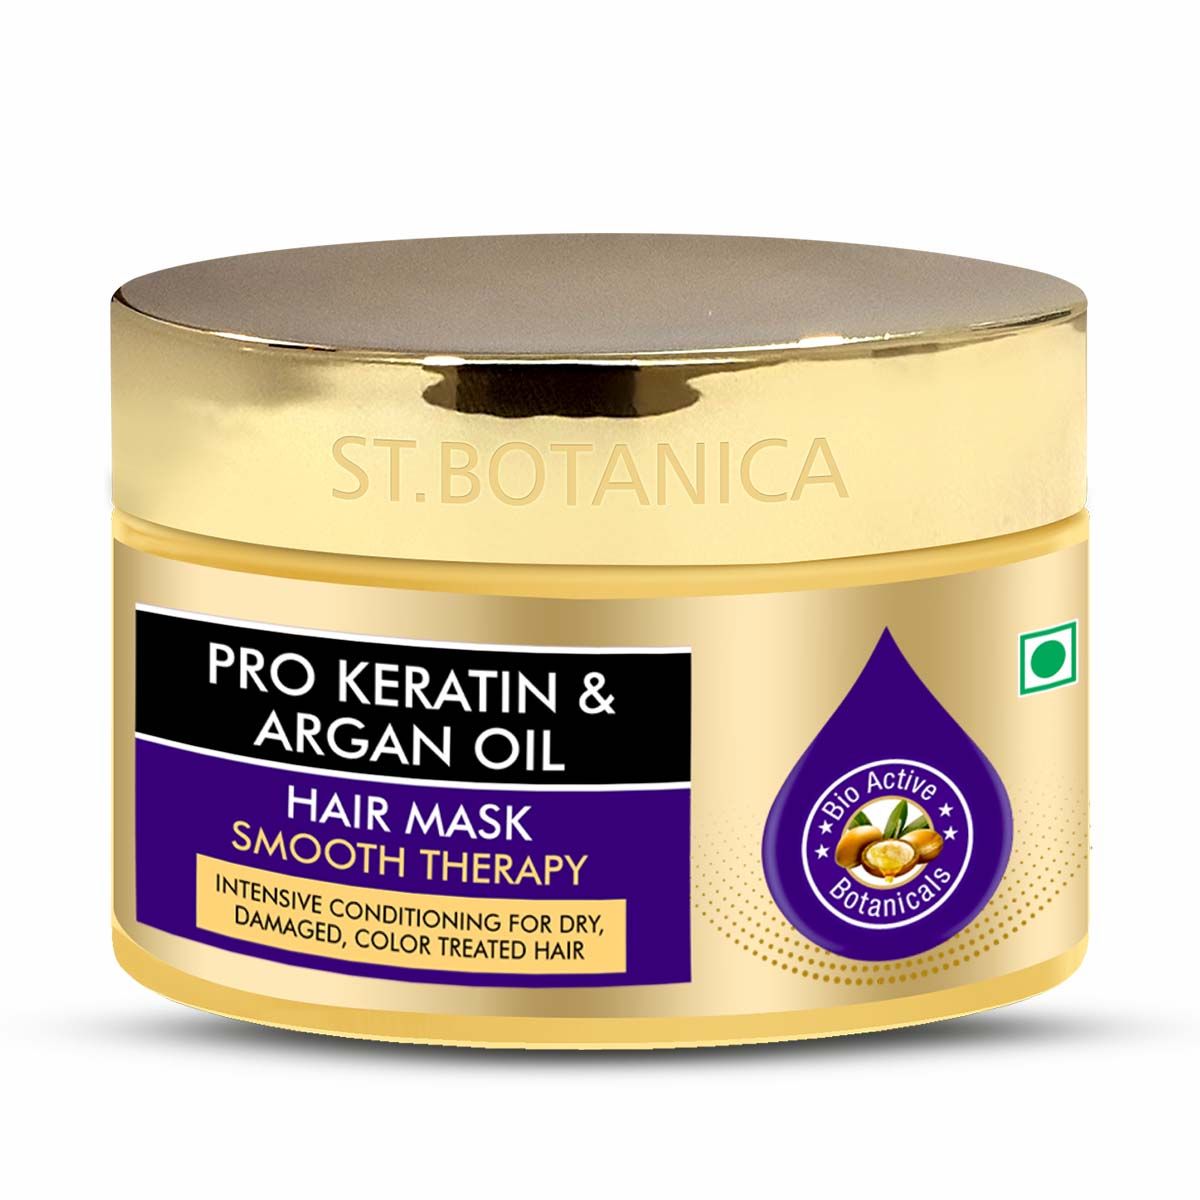 St.Botanica Pro Keratin & Argan Oil Hair Mask